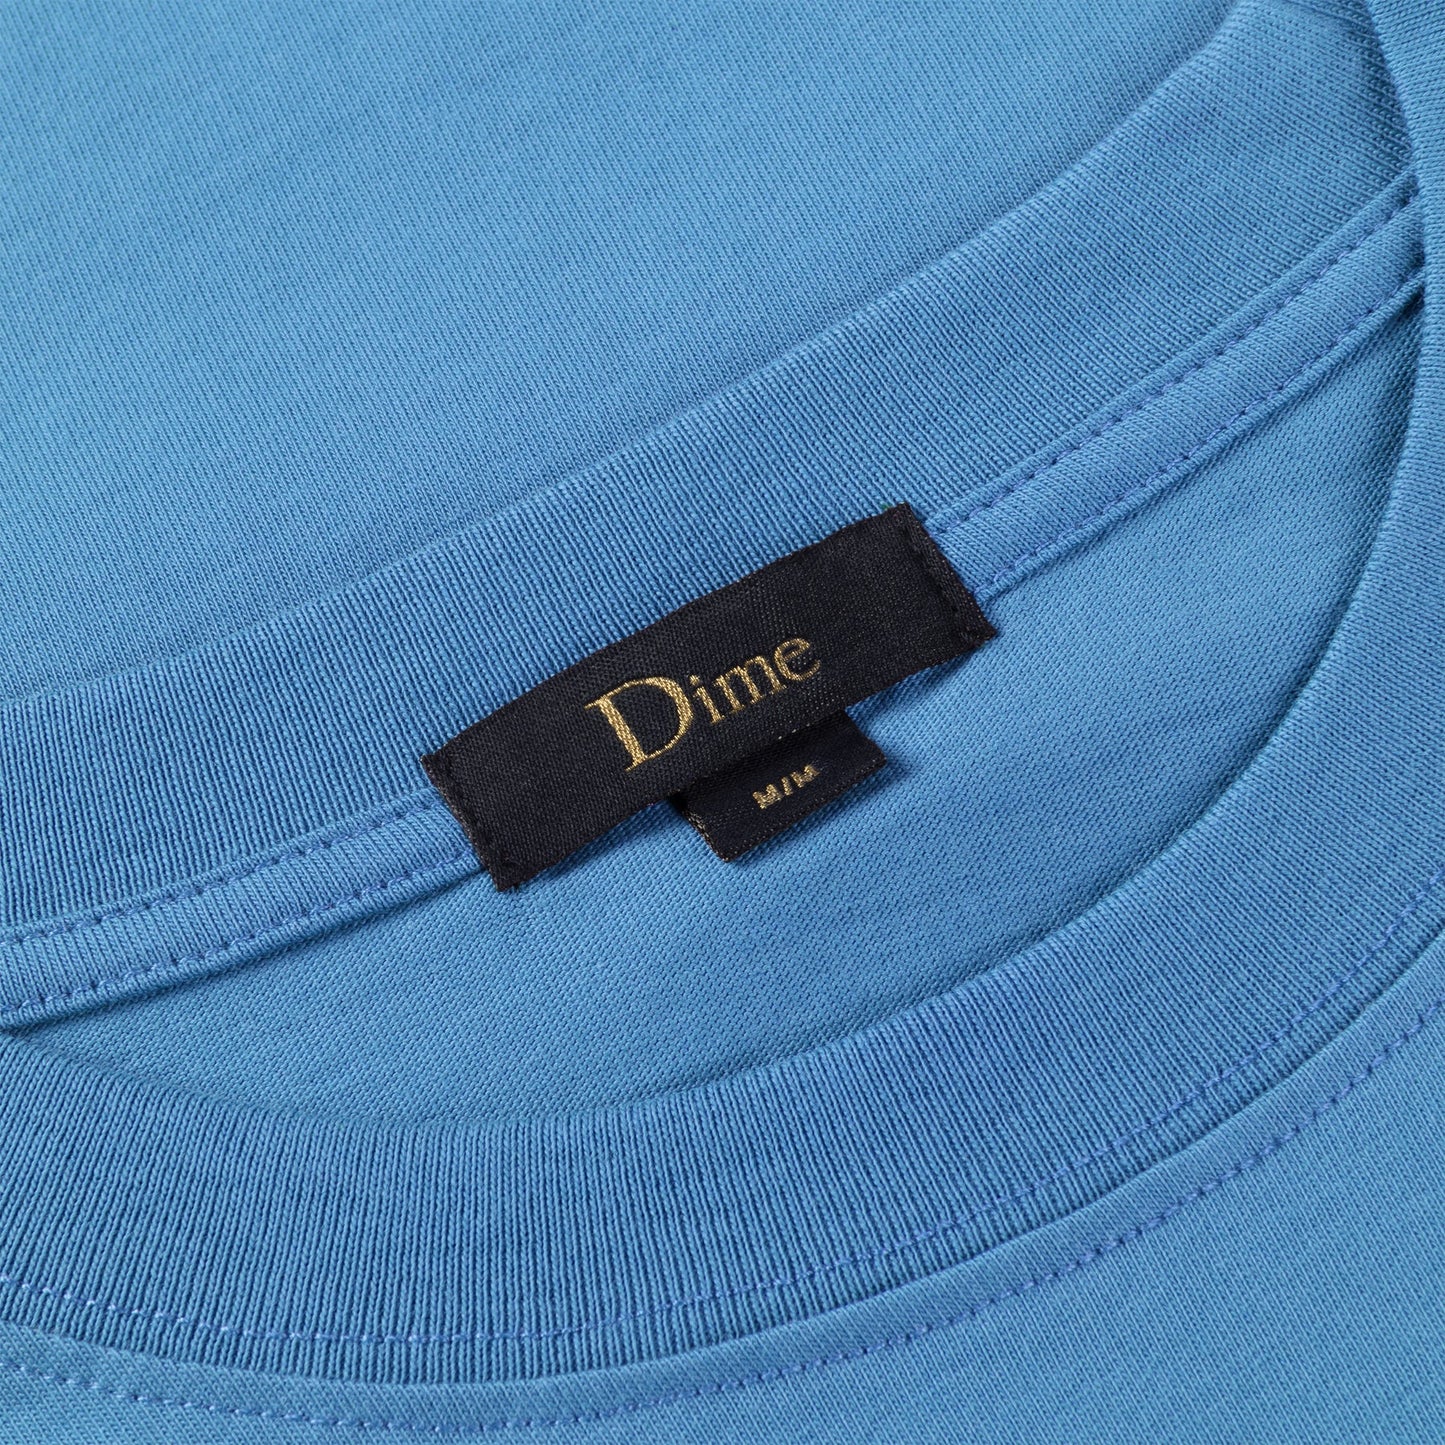 Dime Munson T-Shirt True Blue